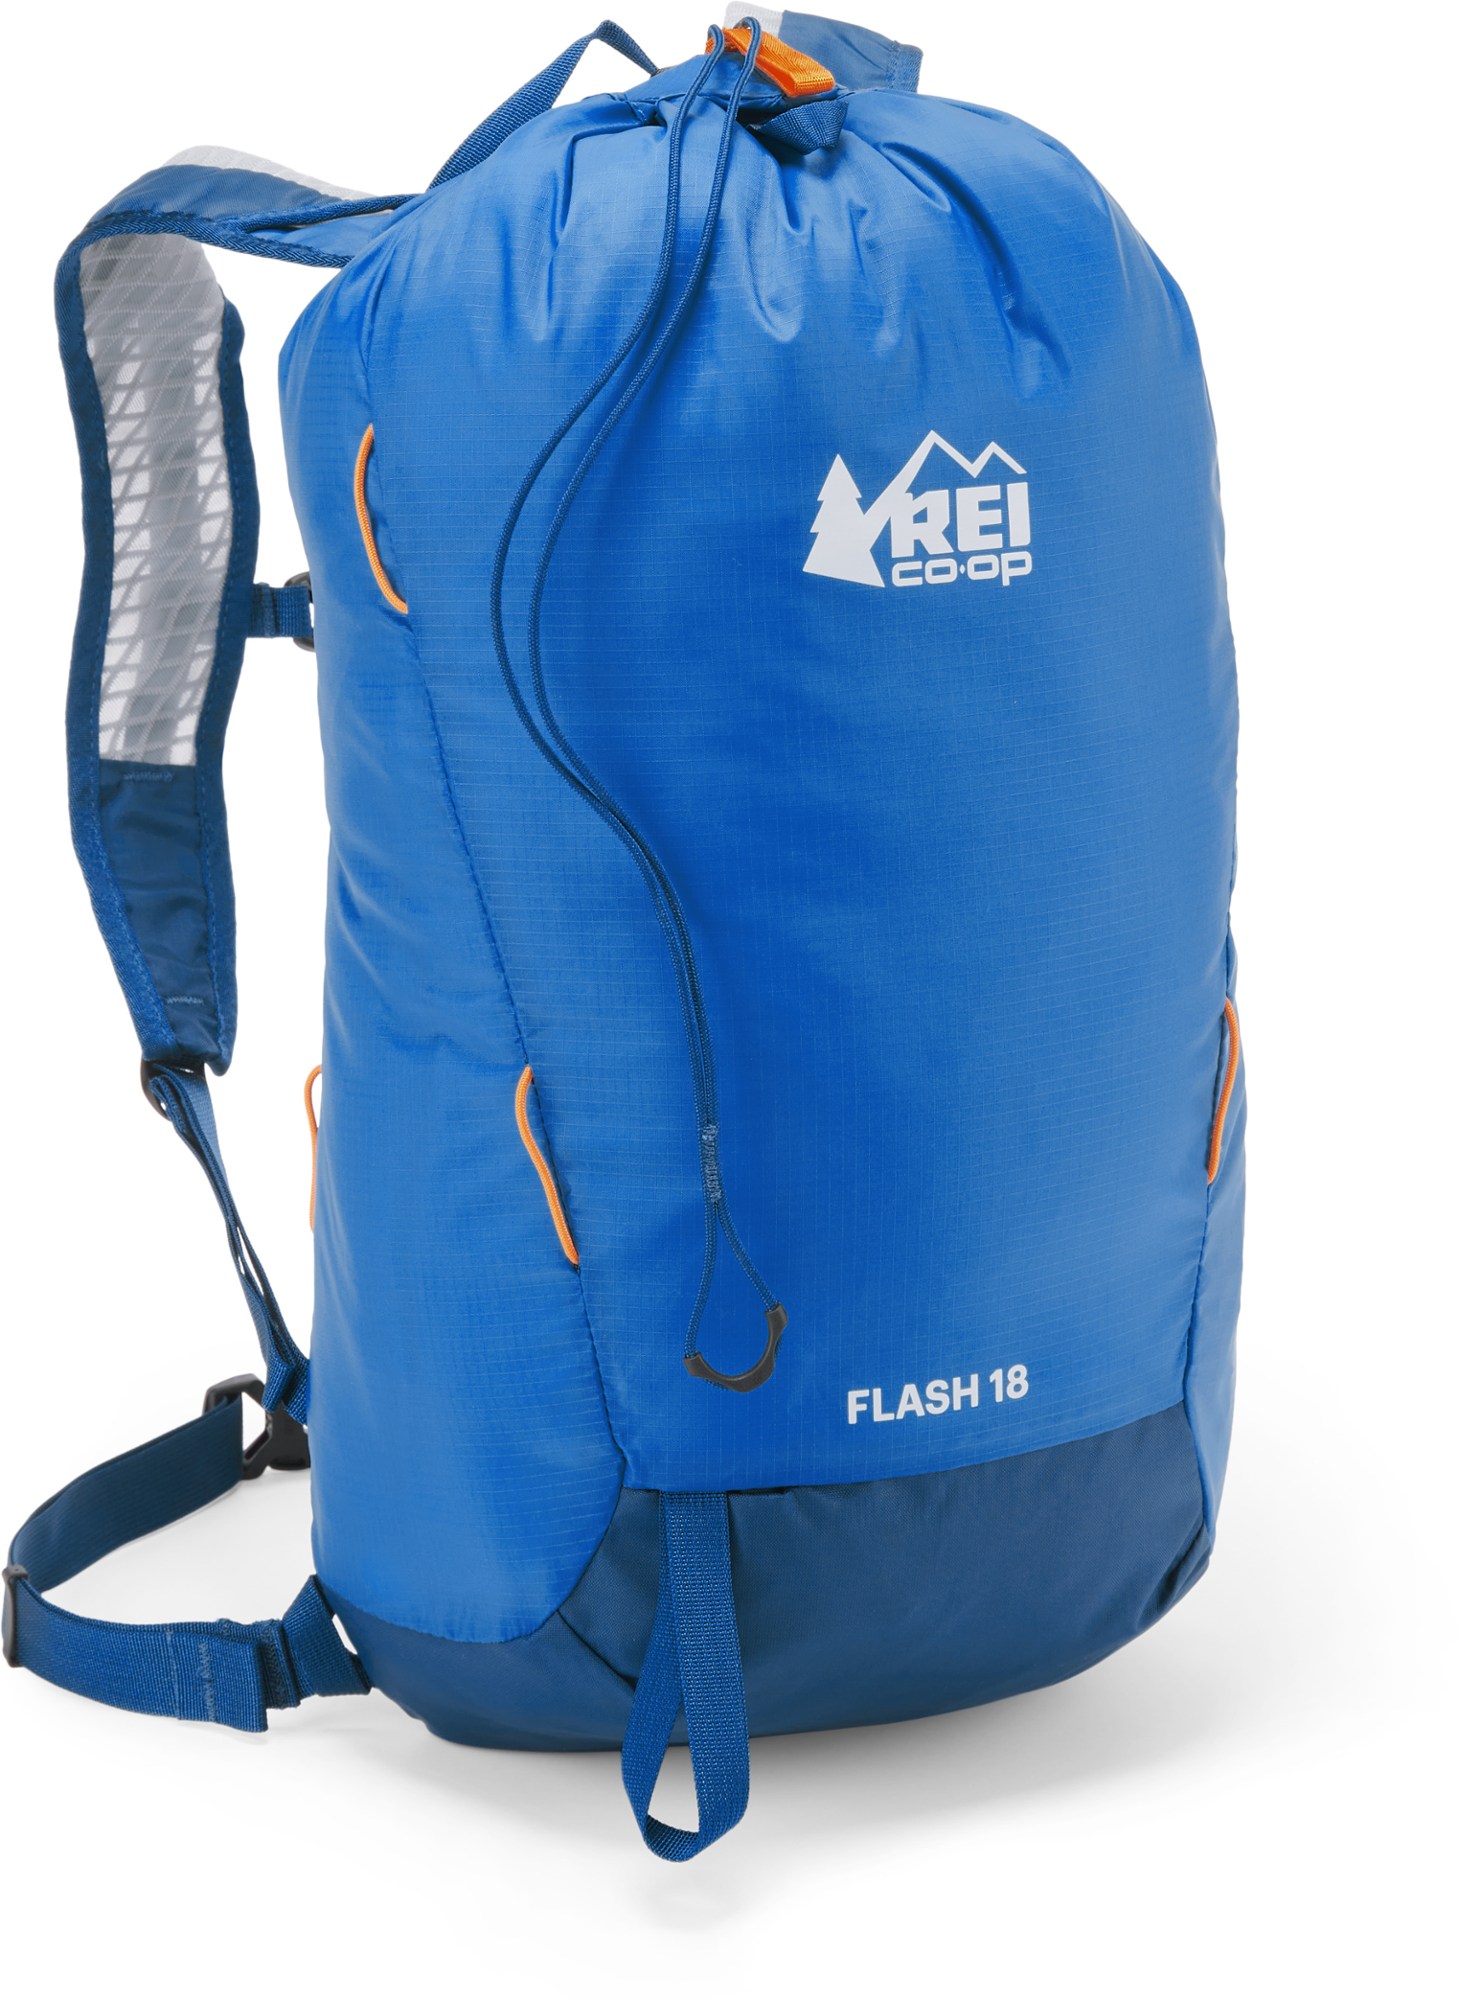 REI Co-op Flash 18 climbing backpack